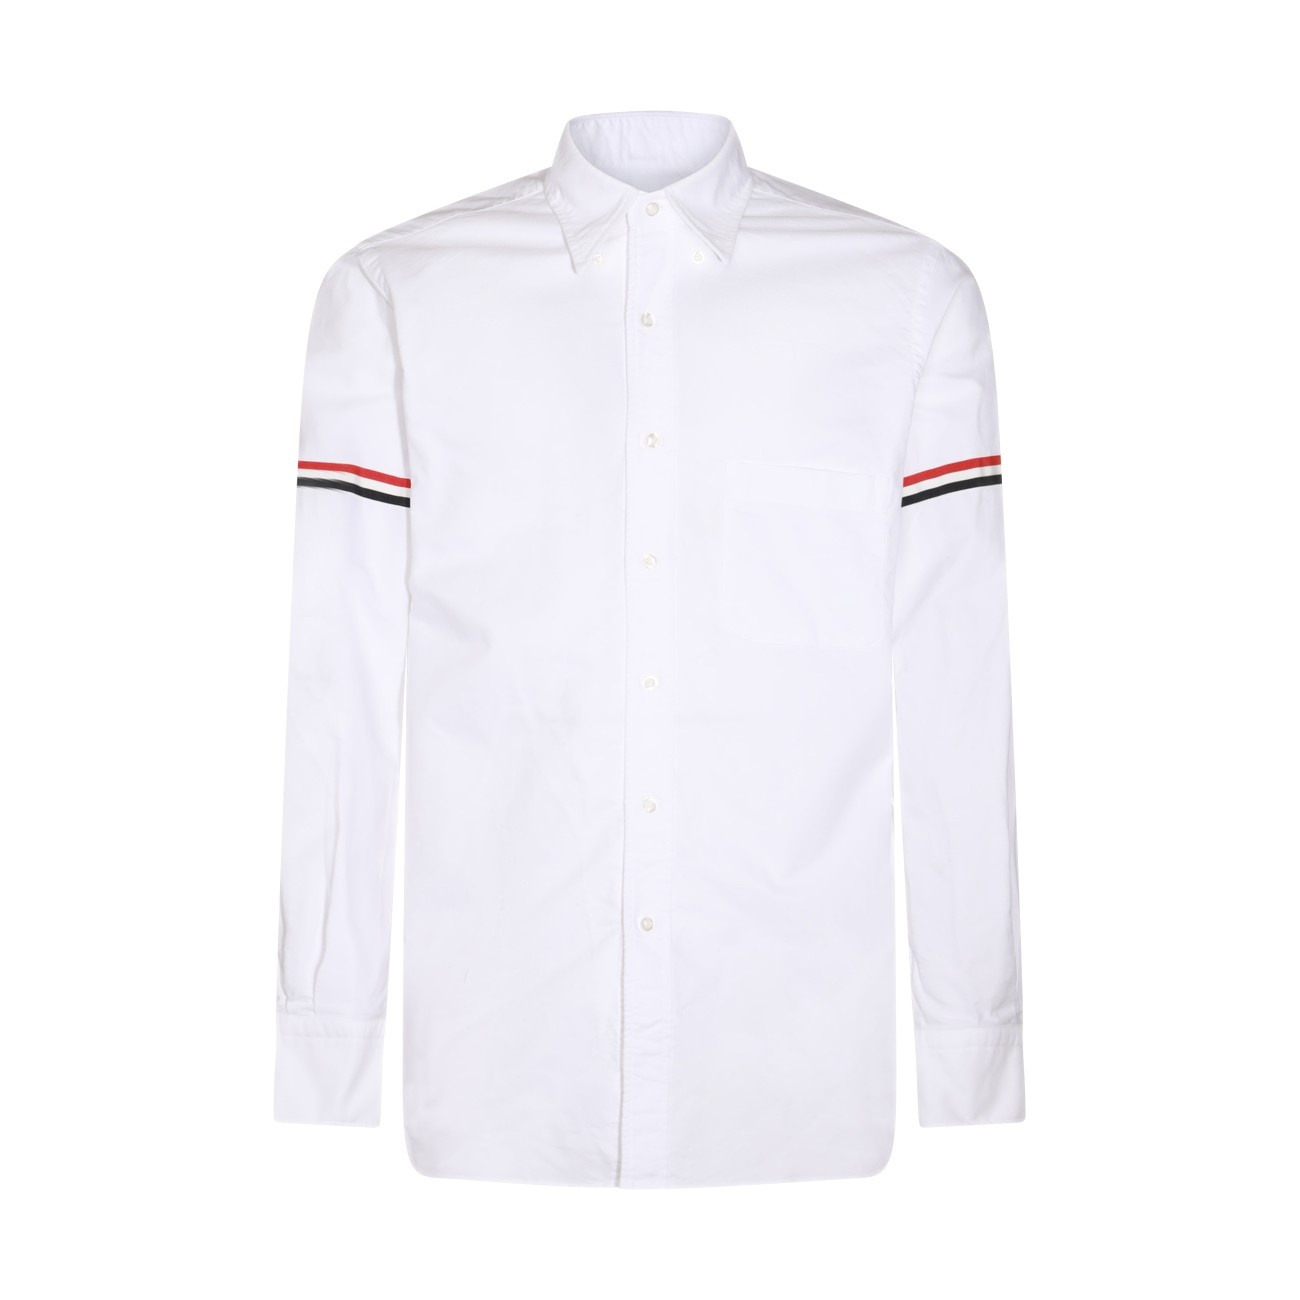 white cotton shirt - 1